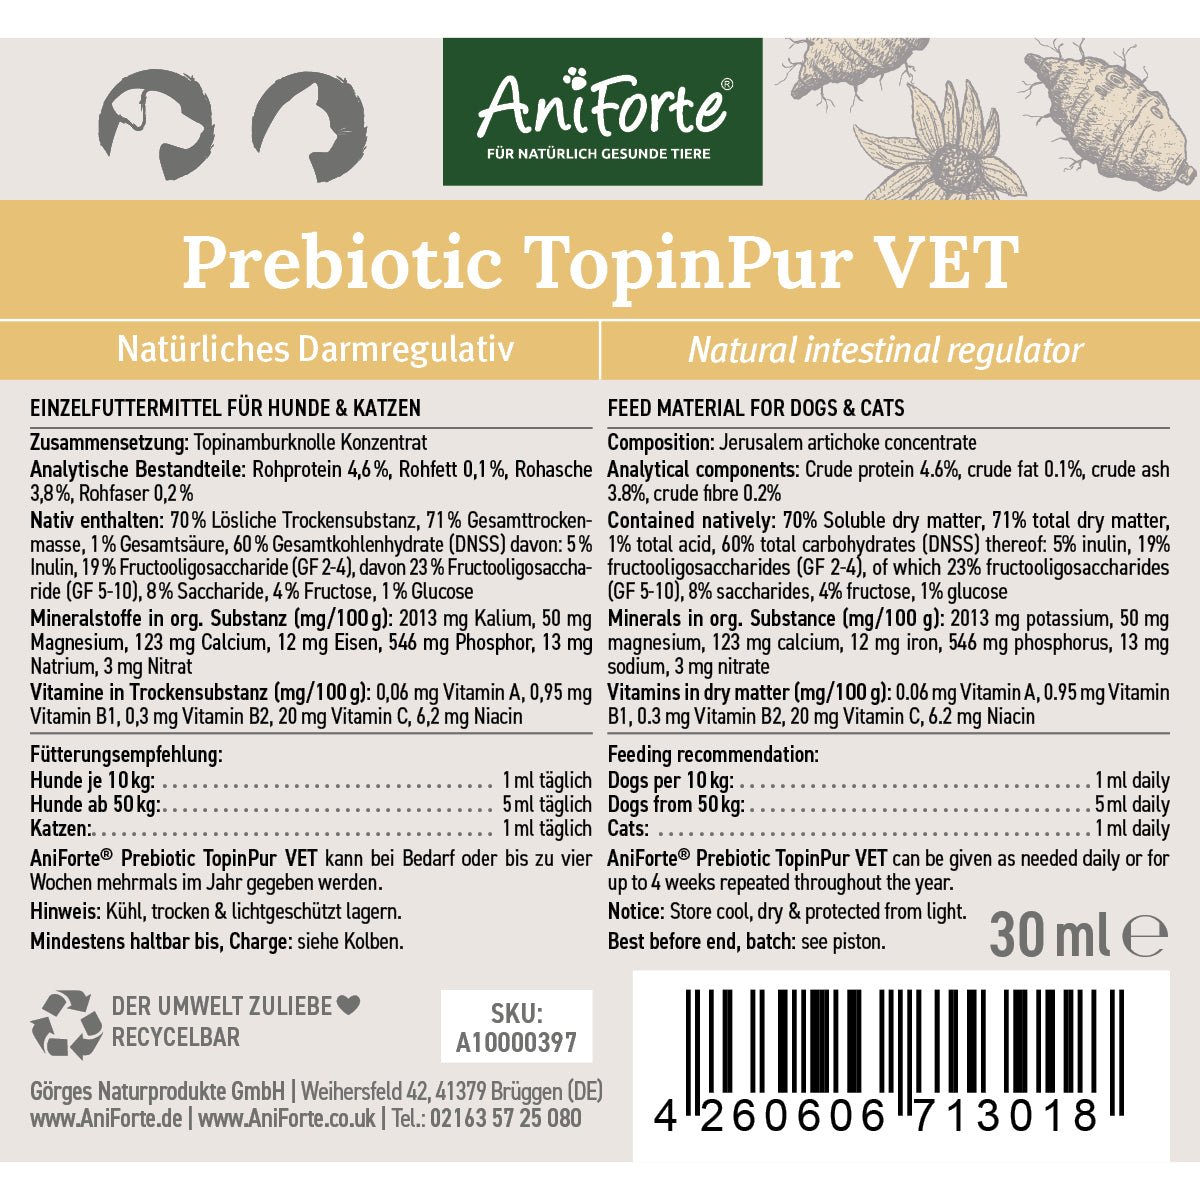 Prebiotic TopinPur VET - AniForte